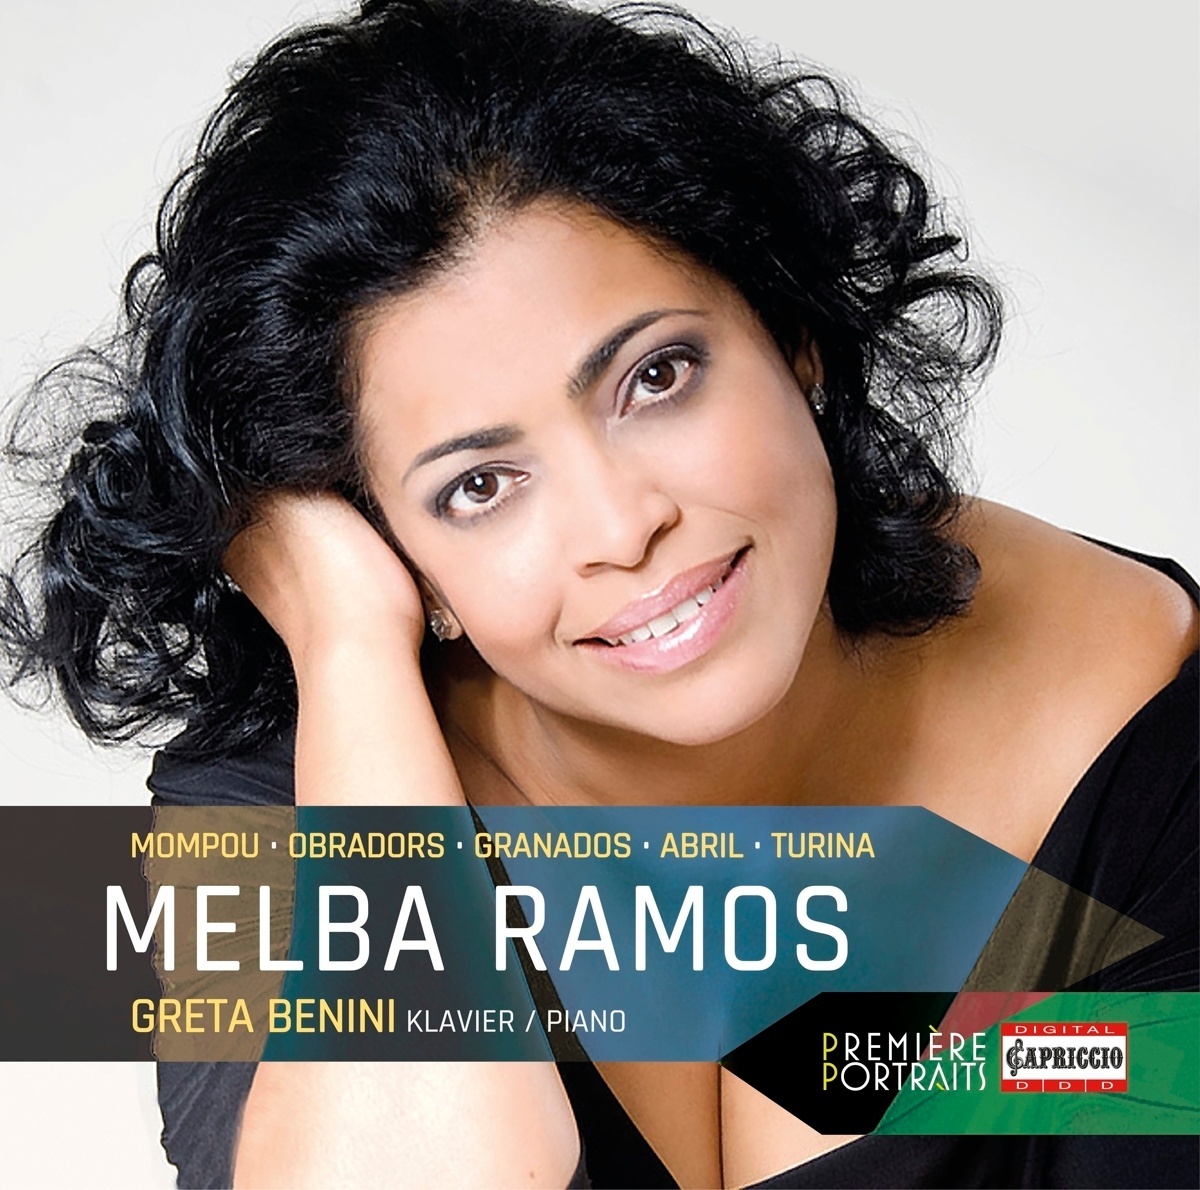 Prémiere Portraits-Melba Ramos - Melba Ramos  Greta Benini. (CD)